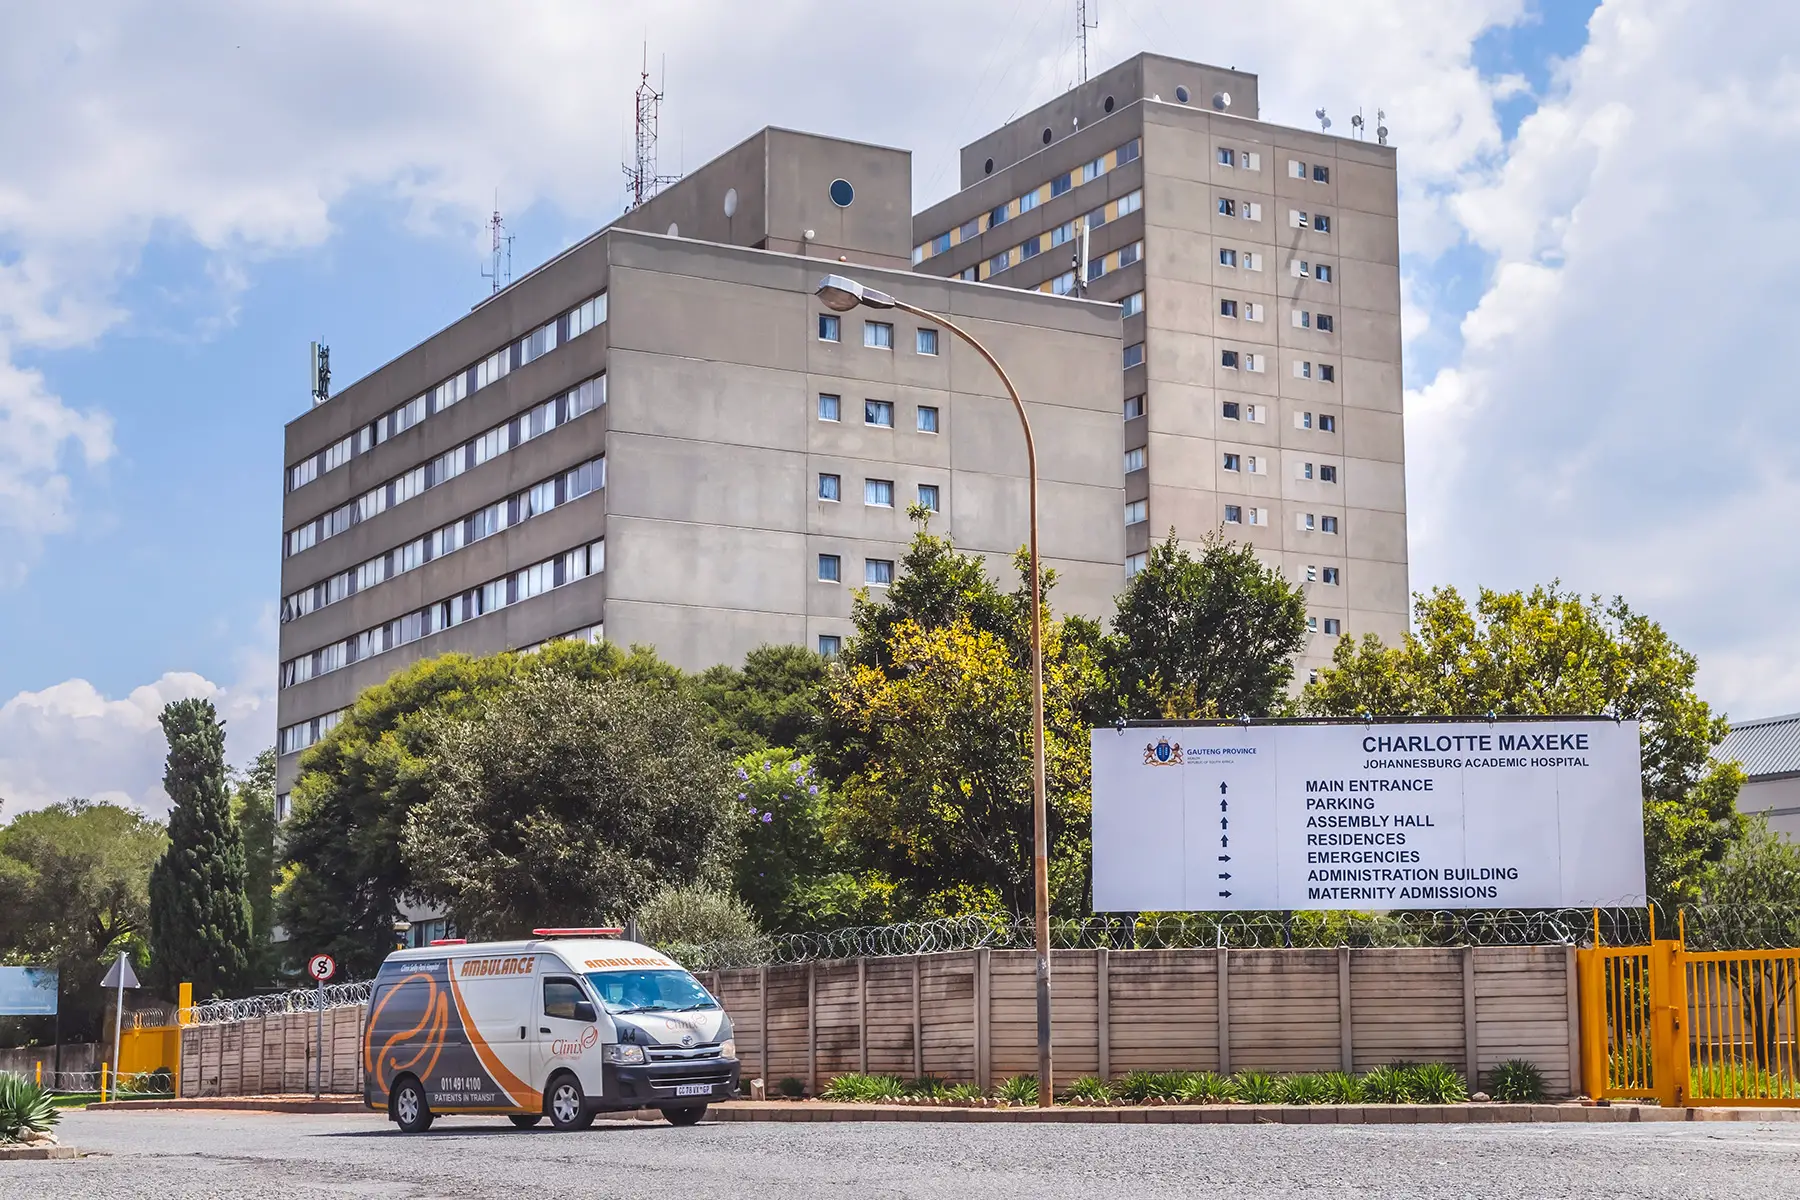 Johannesburg Academic Hospital